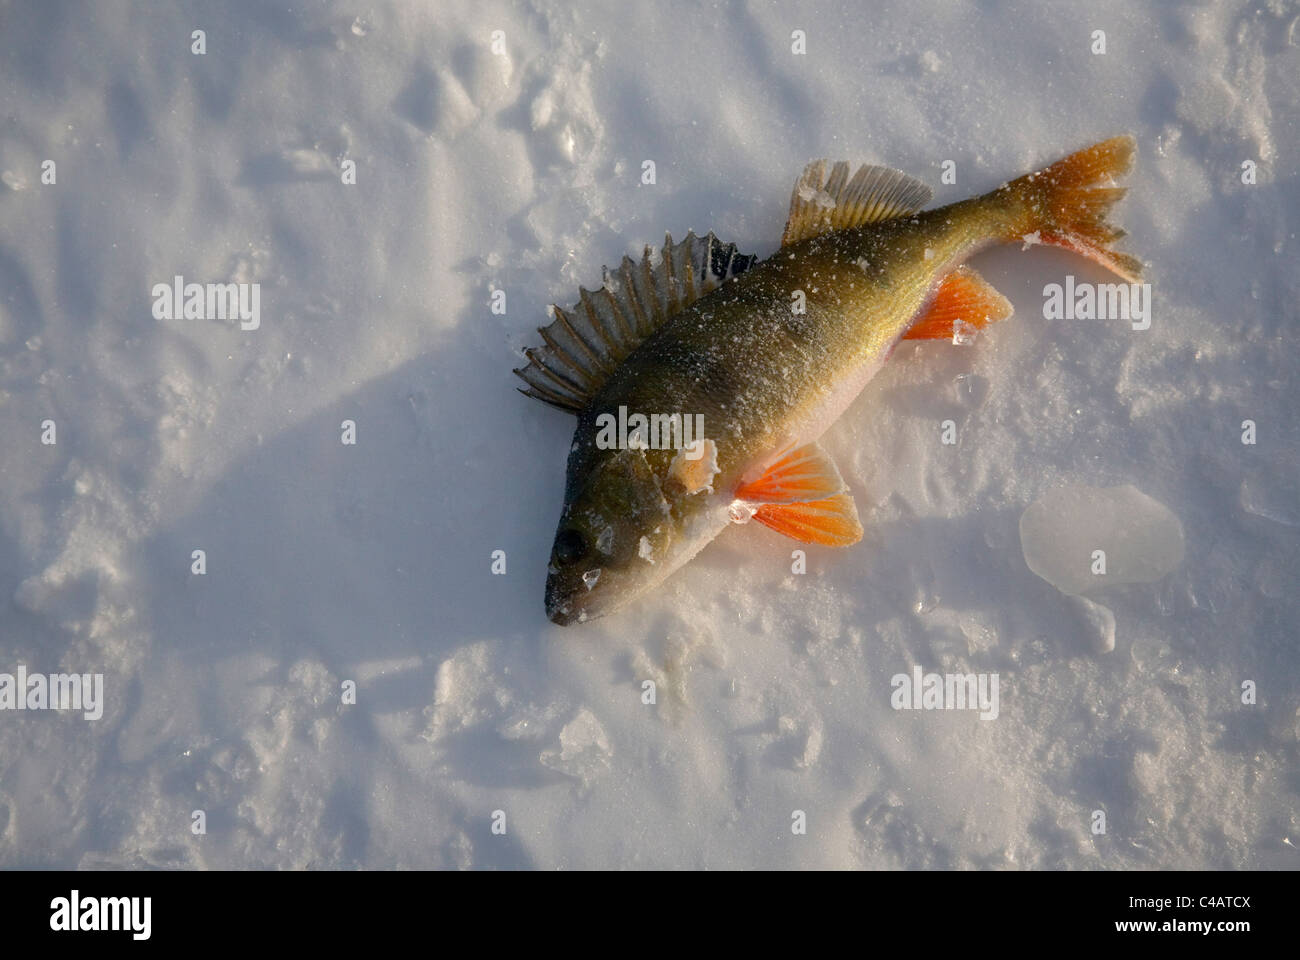 Russia, Siberia, Baikal; A fish caught from the freezing waters of lake baikal Stock Photo